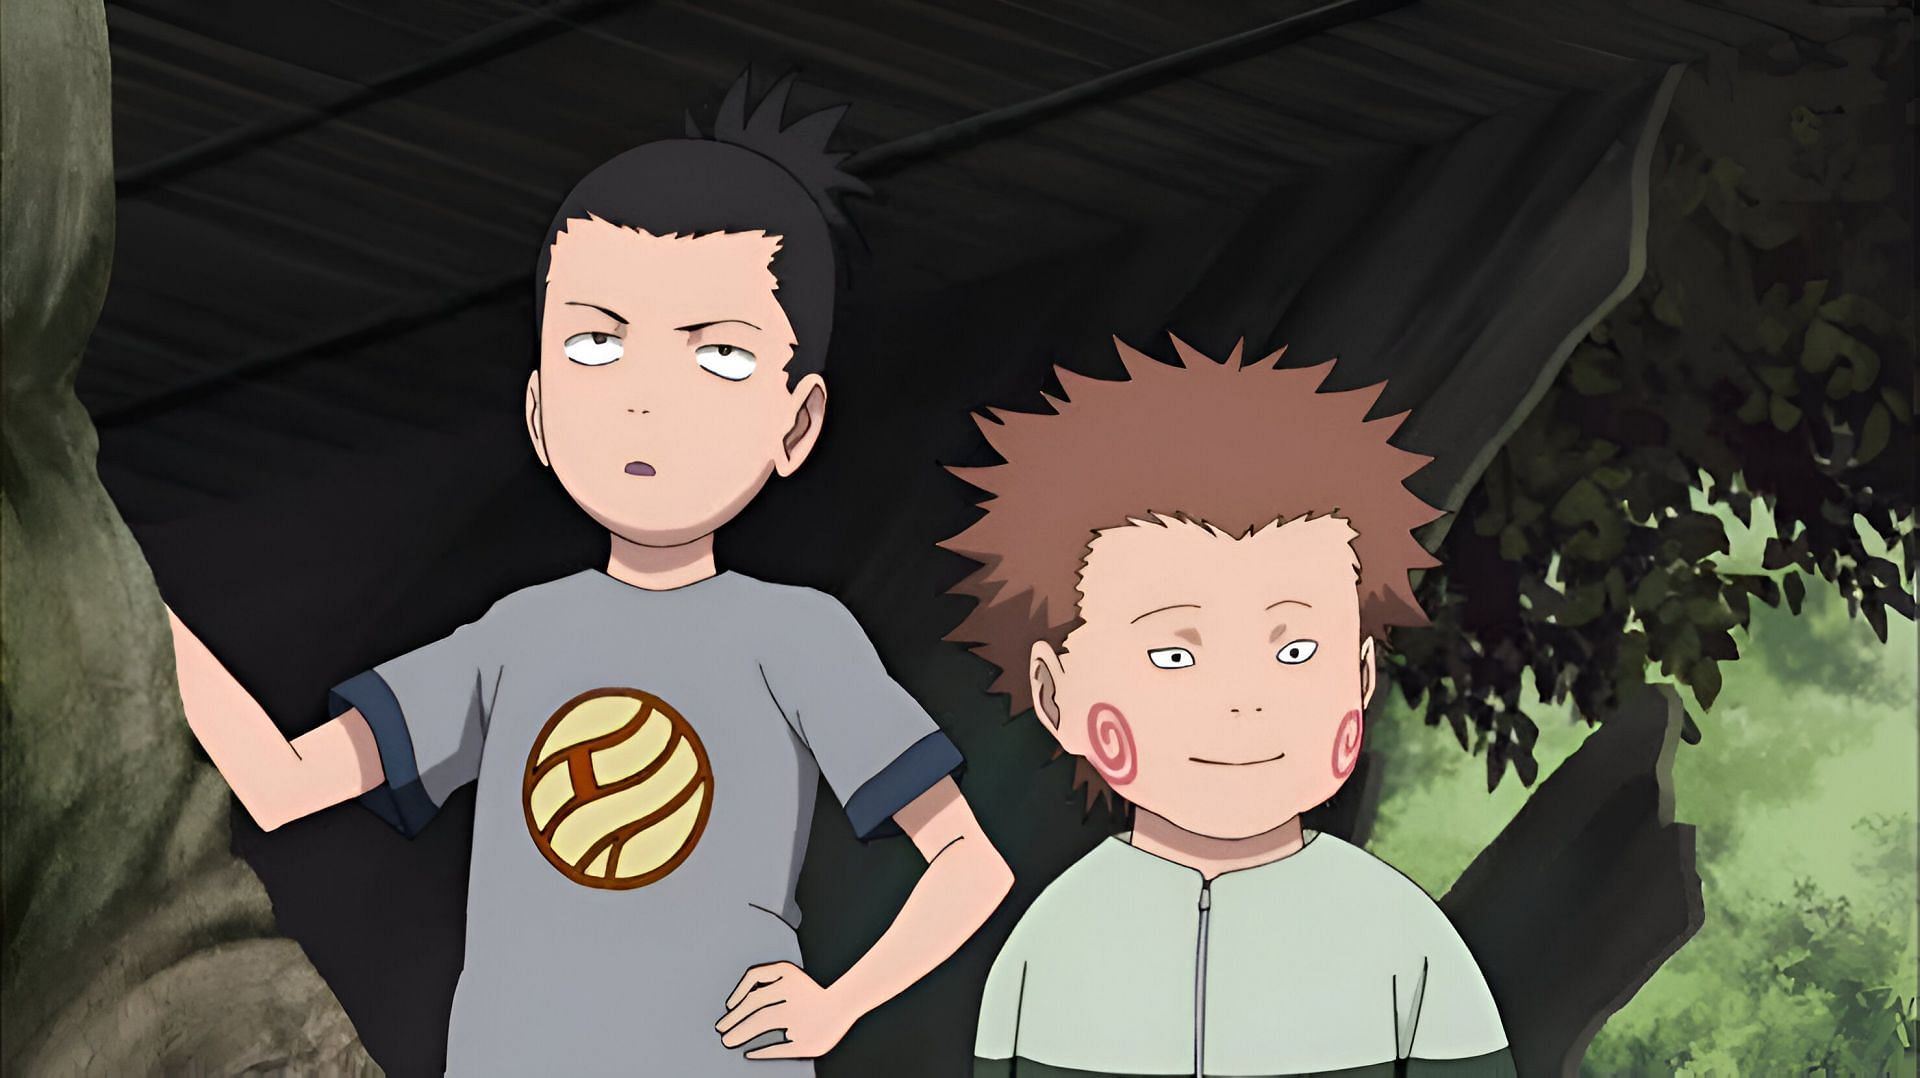 Shikamaru (left) and Choji (right) as seen in the anime (Image via Studio Pierrot)